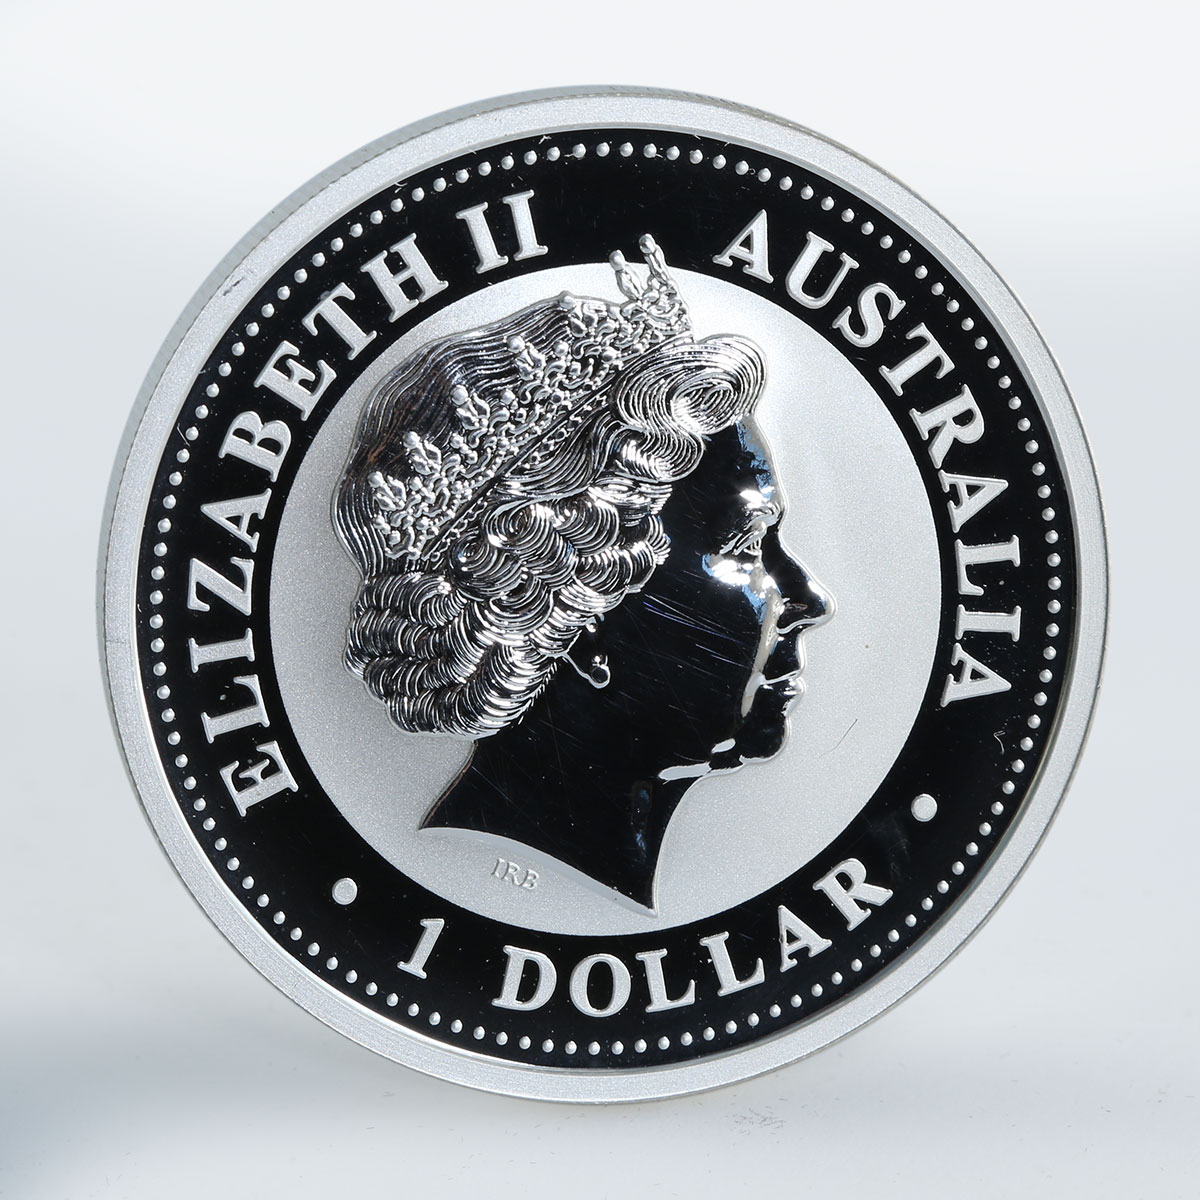 Australia, 1 Dollar, Lunar Year of the Snake silver gilded coin 1oz 2001